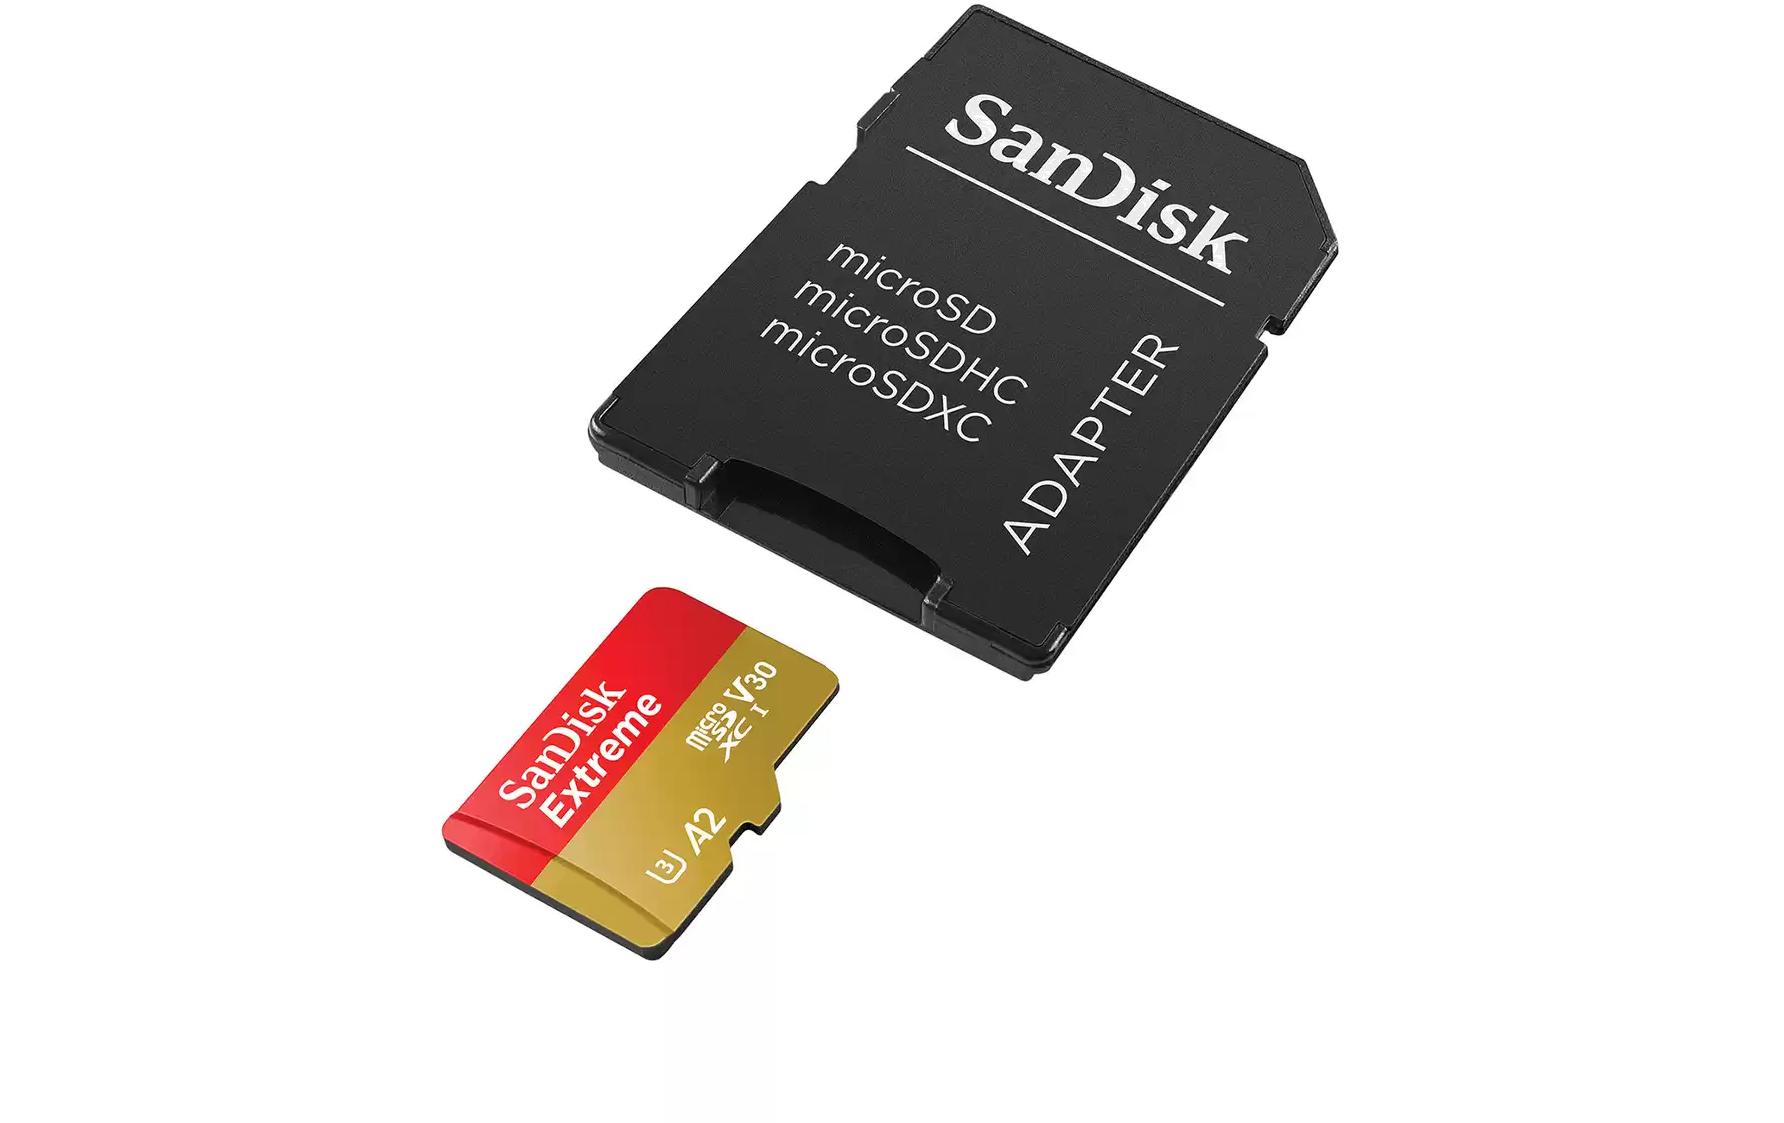 SanDisk microSDXC-Karte Extreme 512 GB